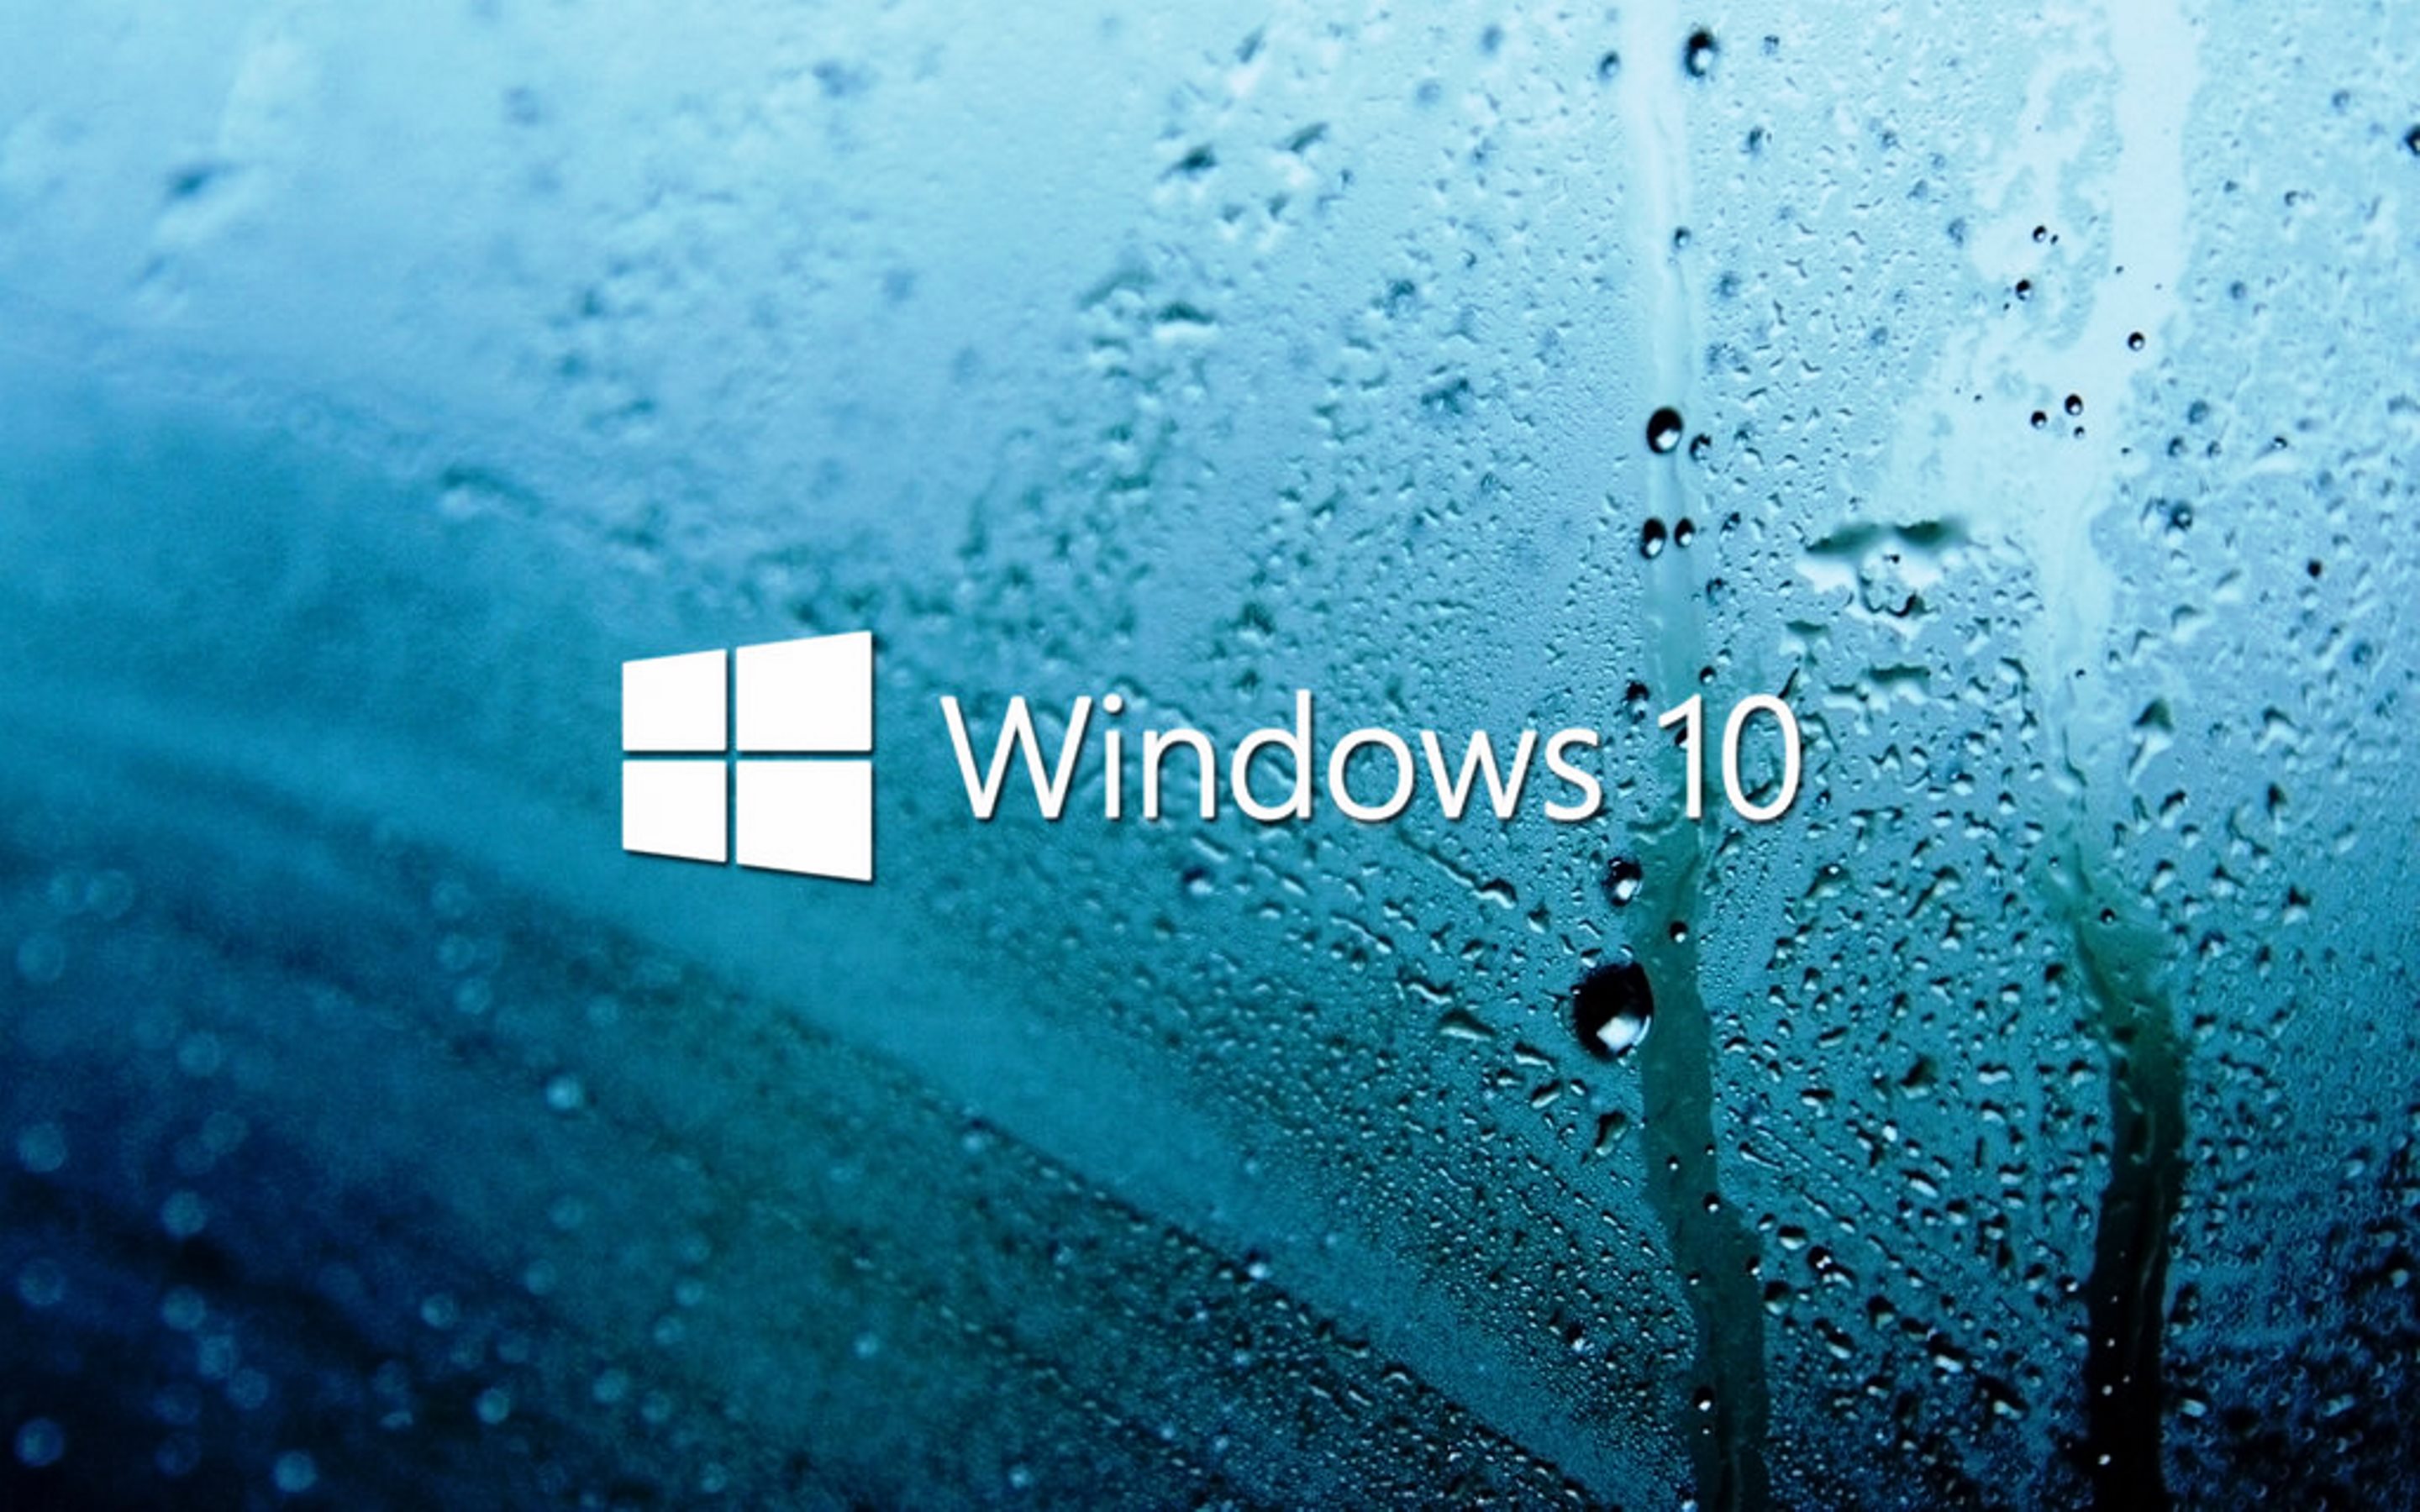 Wallpaper Windows 10 Hd 3d Image Num 26